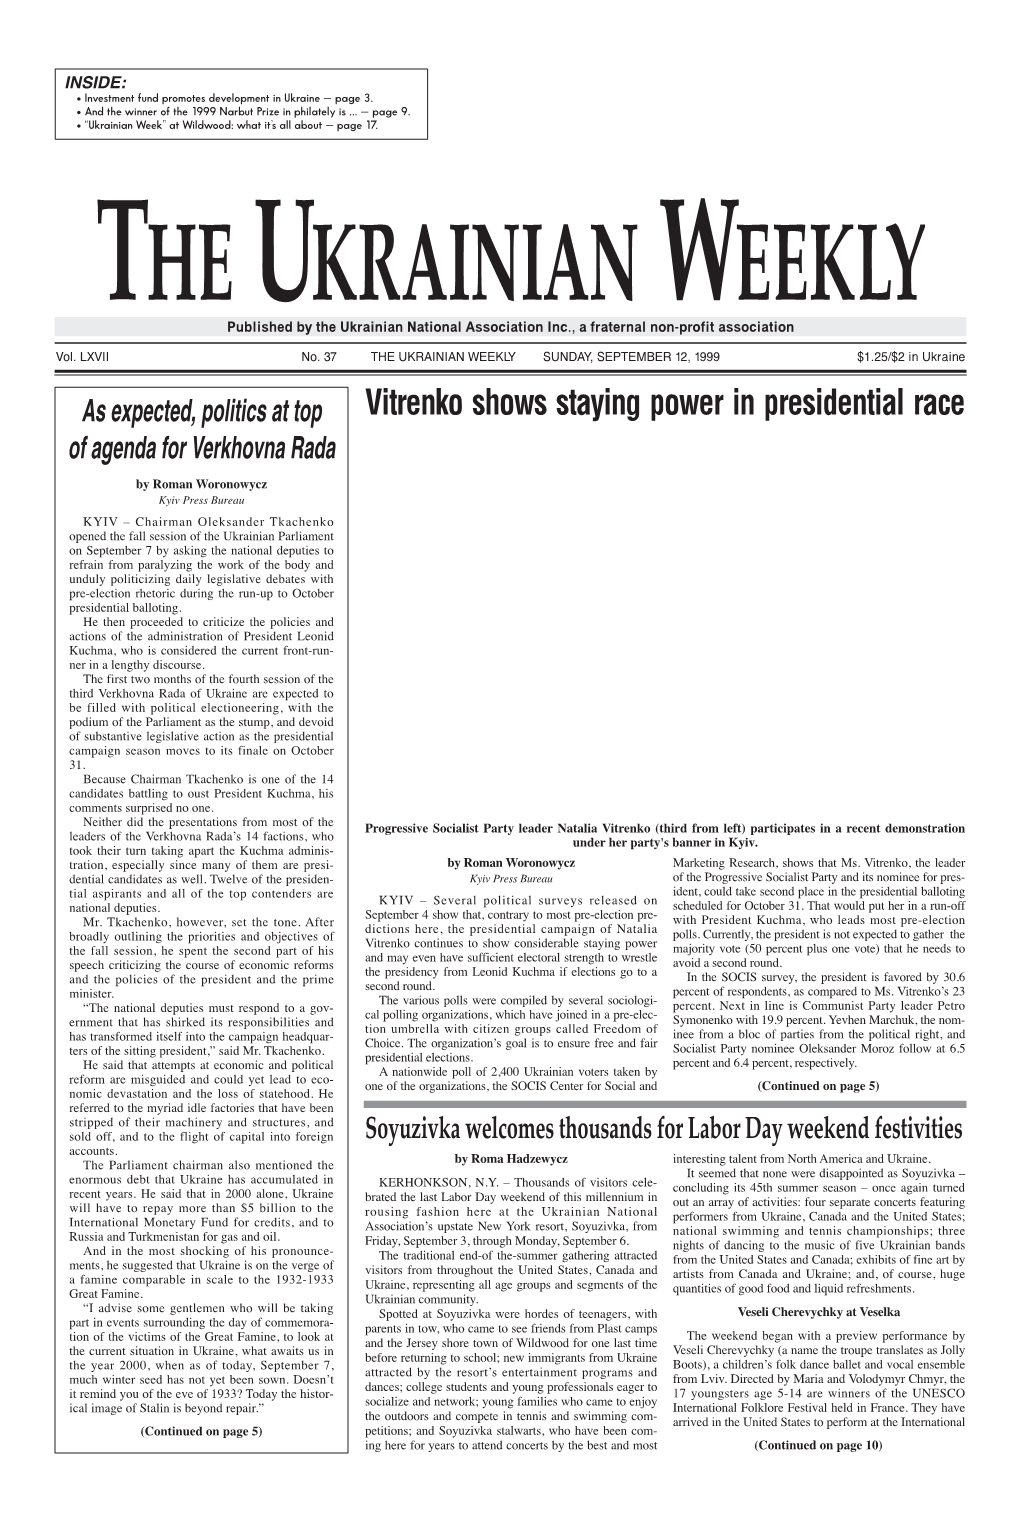 The Ukrainian Weekly 1999, No.37